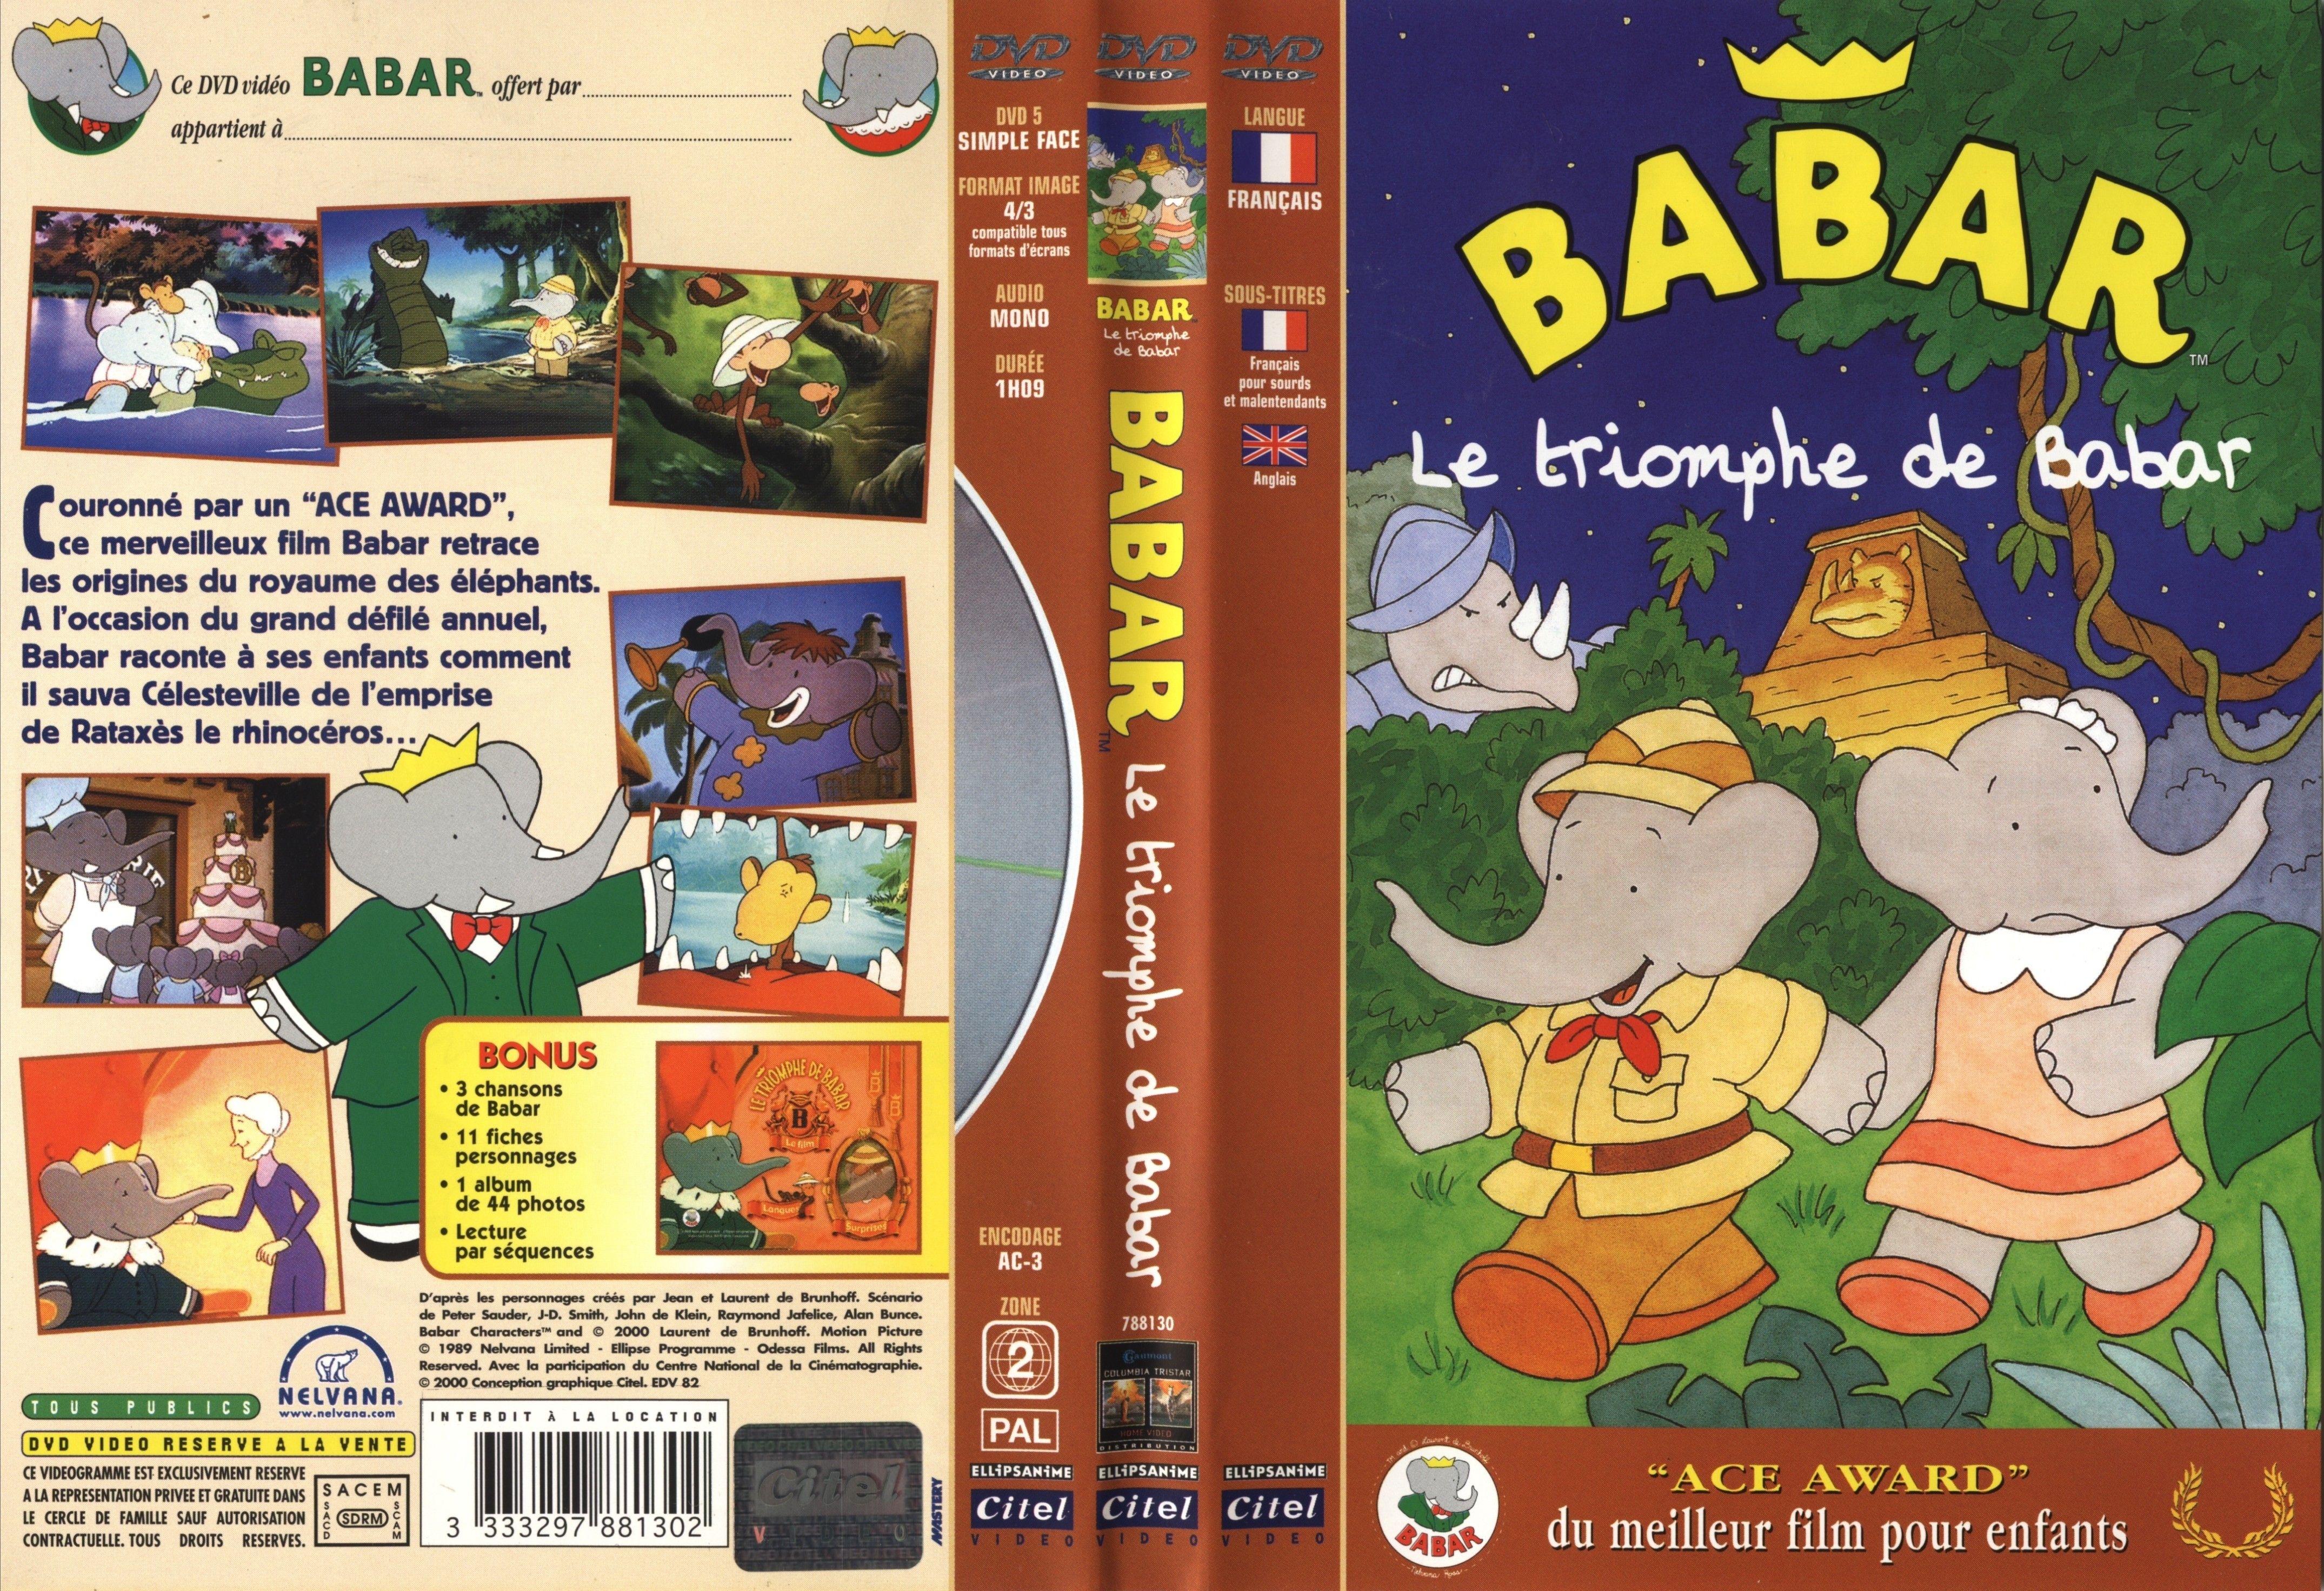 Jaquette DVD Babar le triomphe de babar